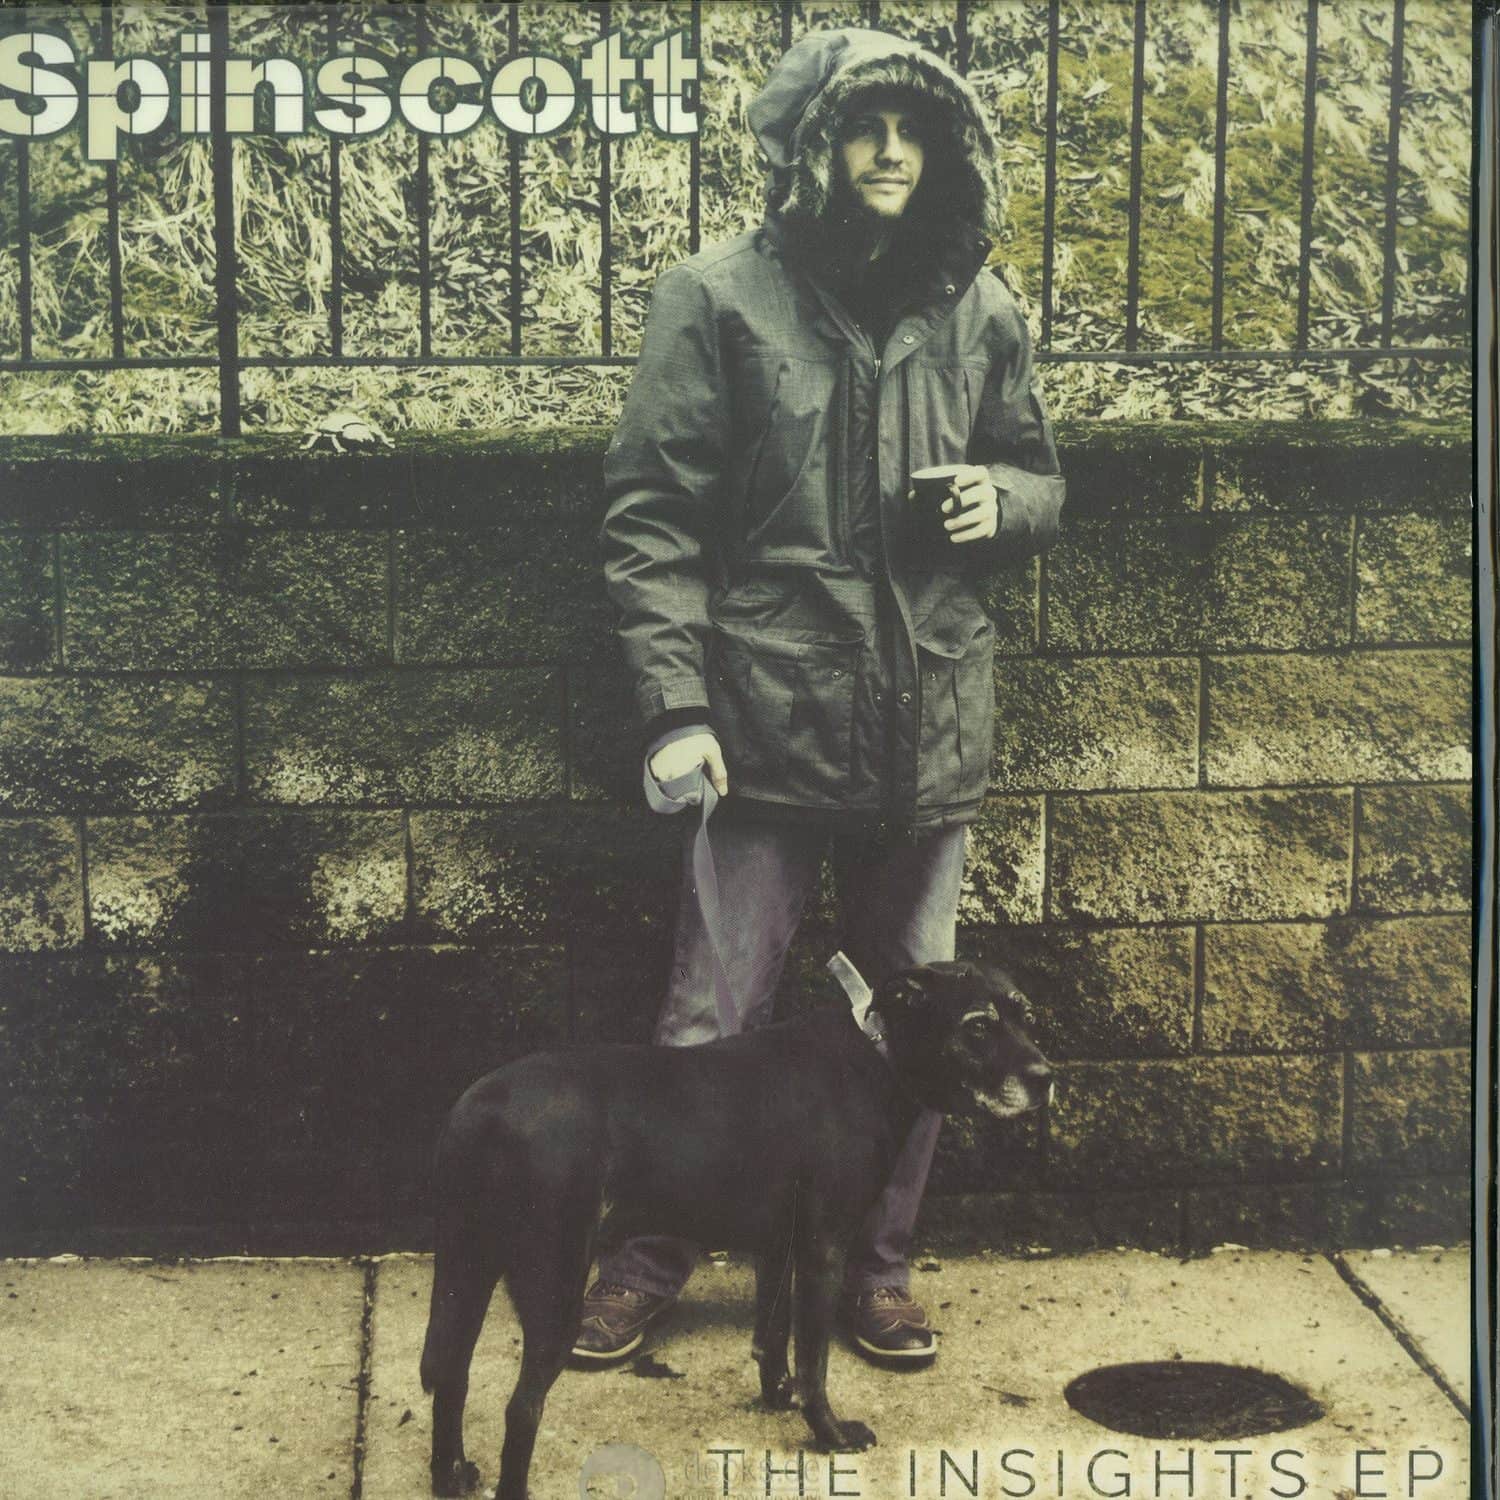 Spinscott - THE INSIGHTS